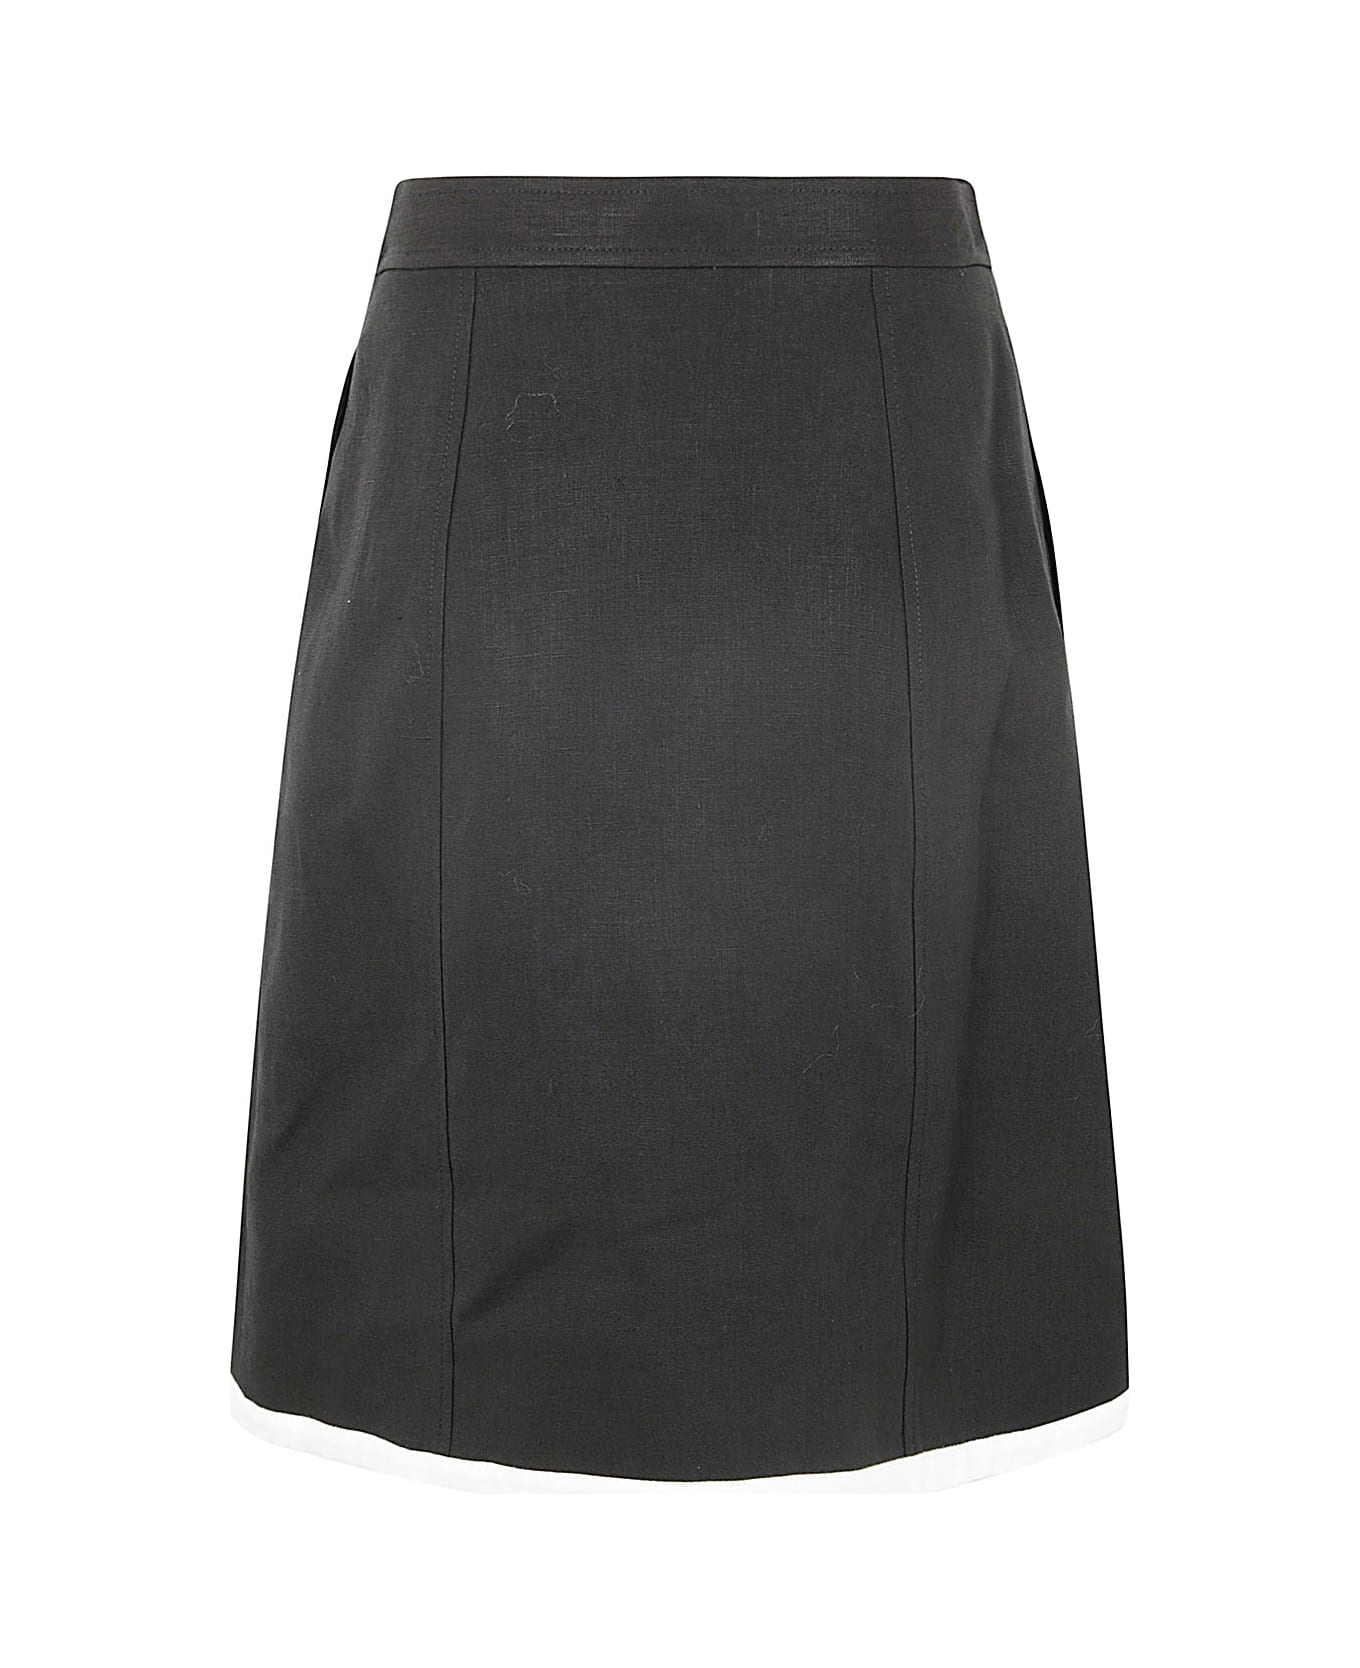 Paul Smith Wallet Skirt - Black スカート